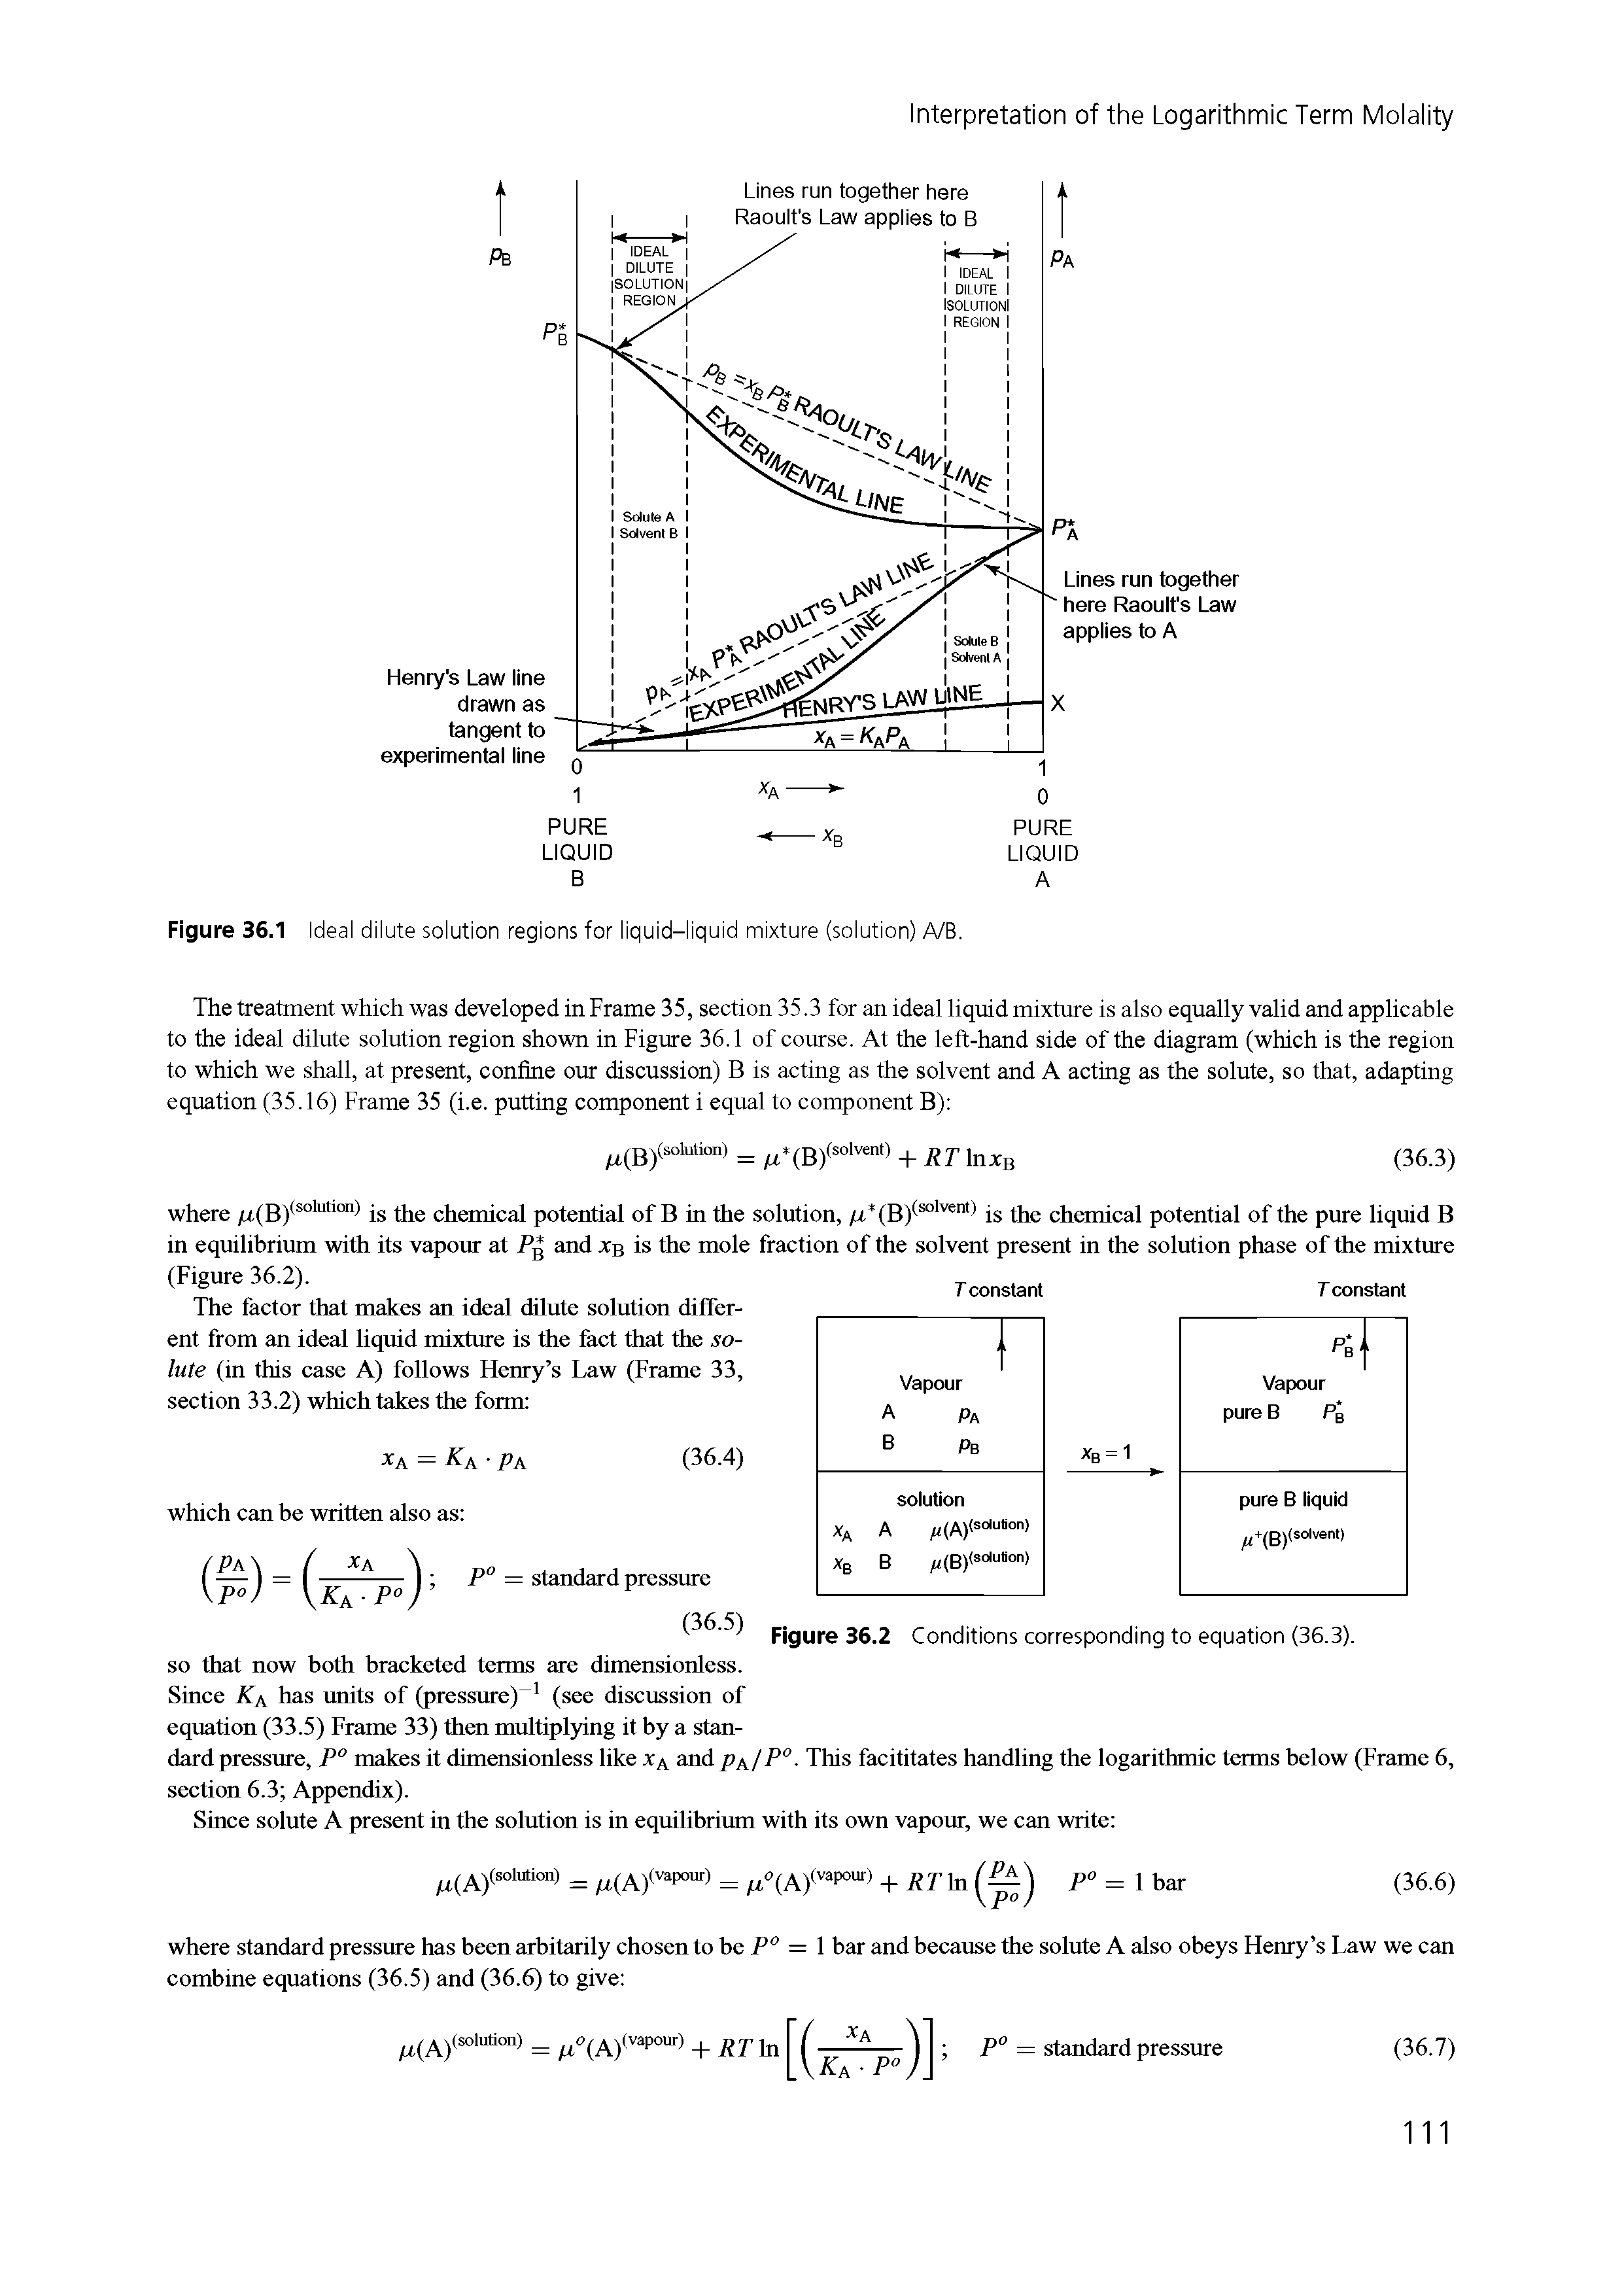 Figure 36.1 Ideal dilute solution regions for liquid-liquid mixture (solution) A/B.